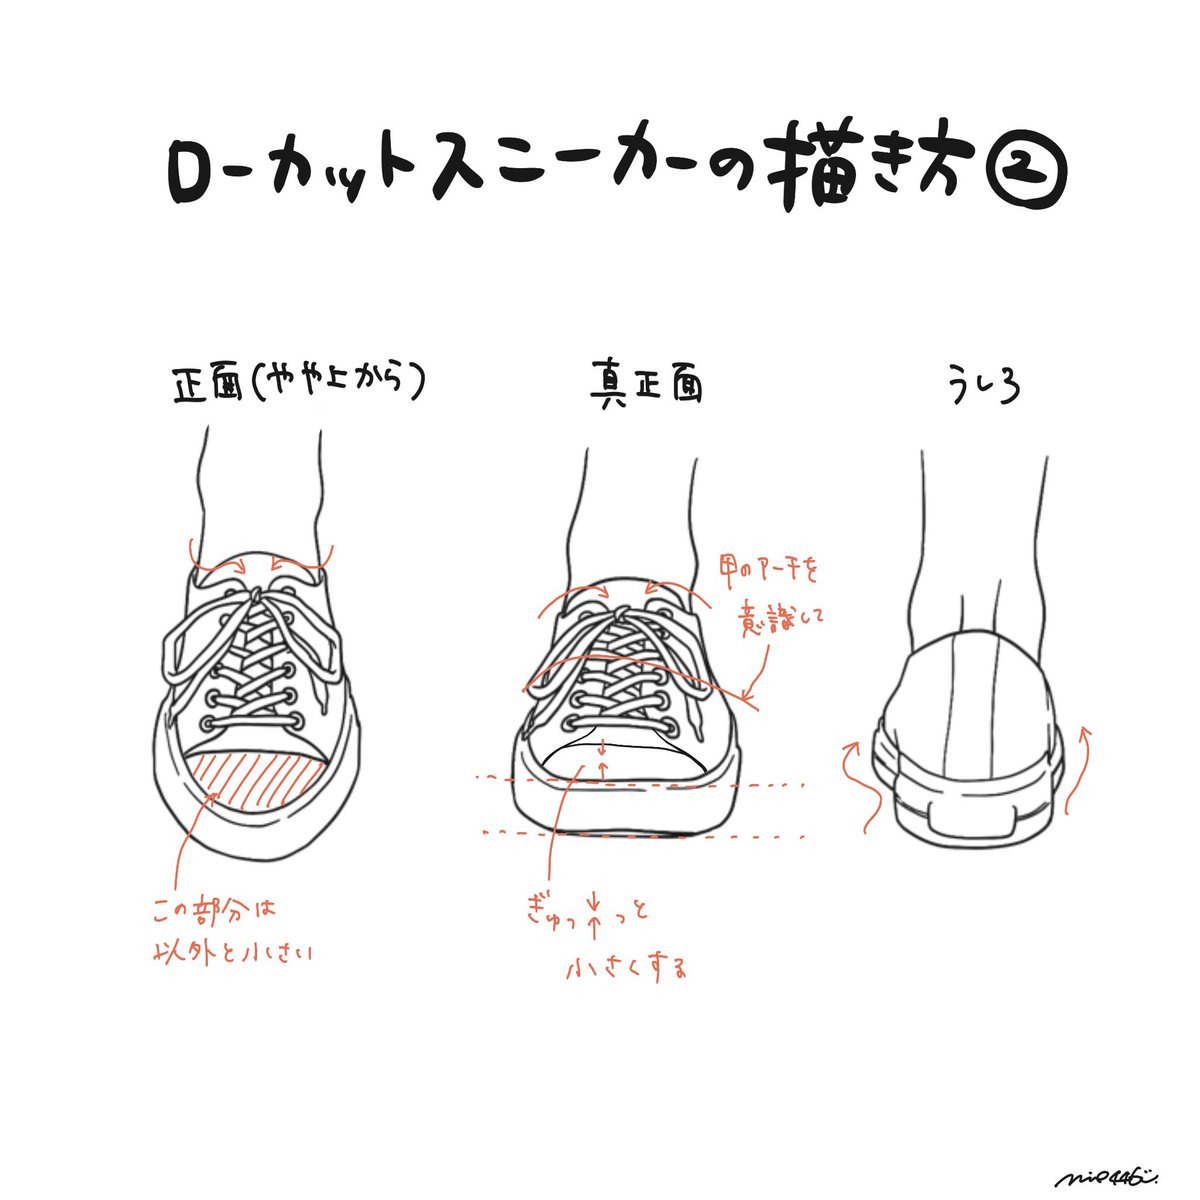 توییتر みえ 靴 イラスト در توییتر ローカットスニーカーの描き方 再掲 靴の描き方tips T Co Amllchztxr